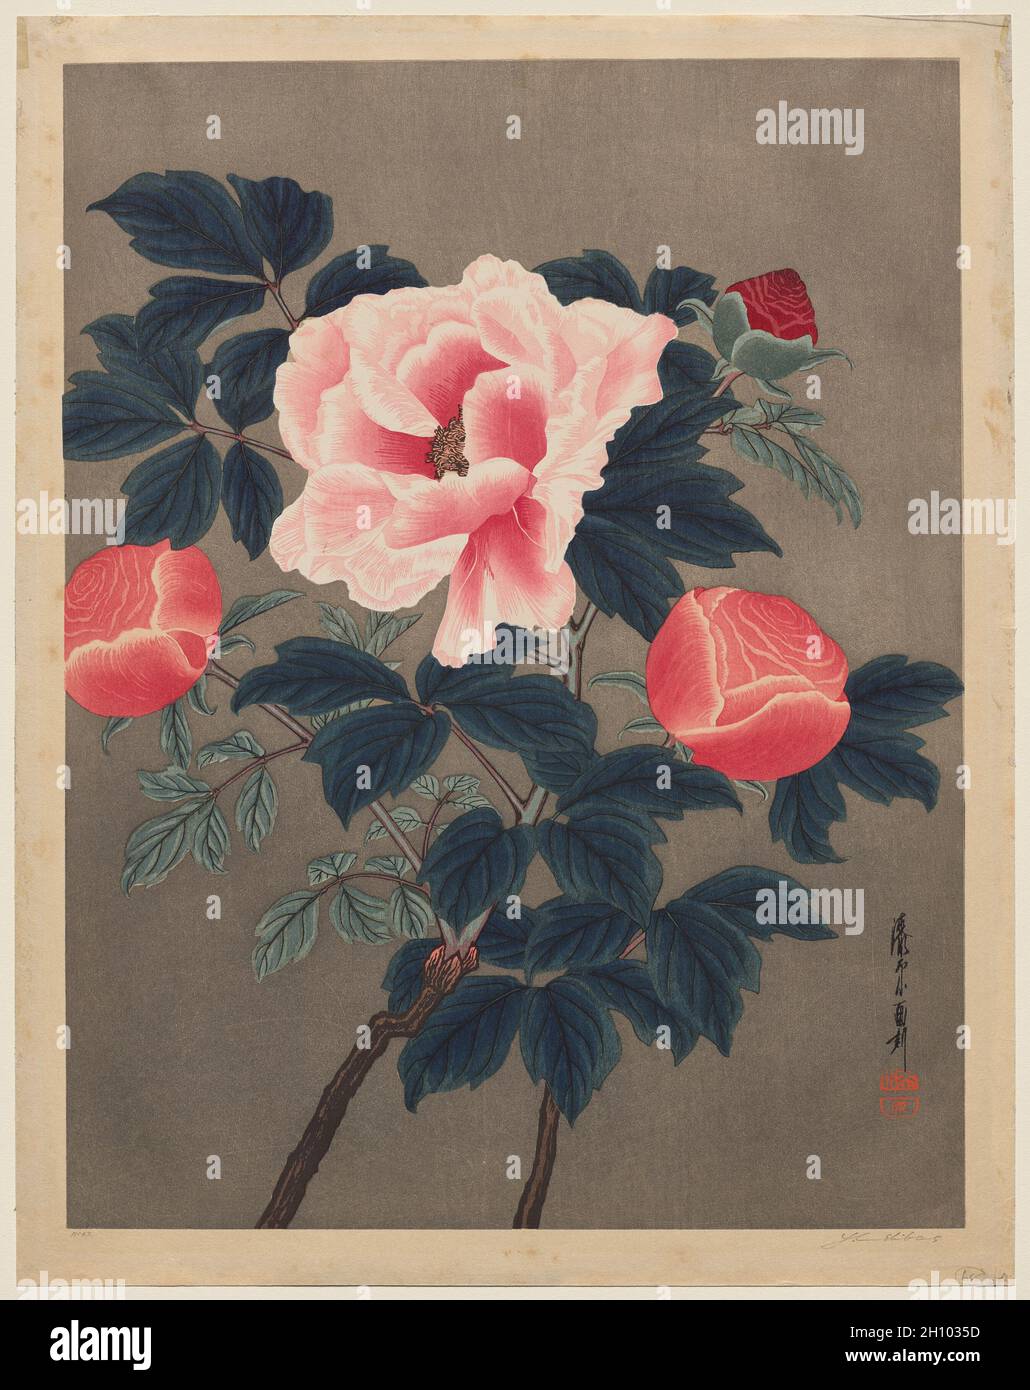 Peonies, c 1900s. Yoshijiro Urushibara (Japanese, 1889-1953). Color woodcut; paper: 68.3 x 54.9 cm (26 7/8 x 21 5/8 in.). Stock Photo